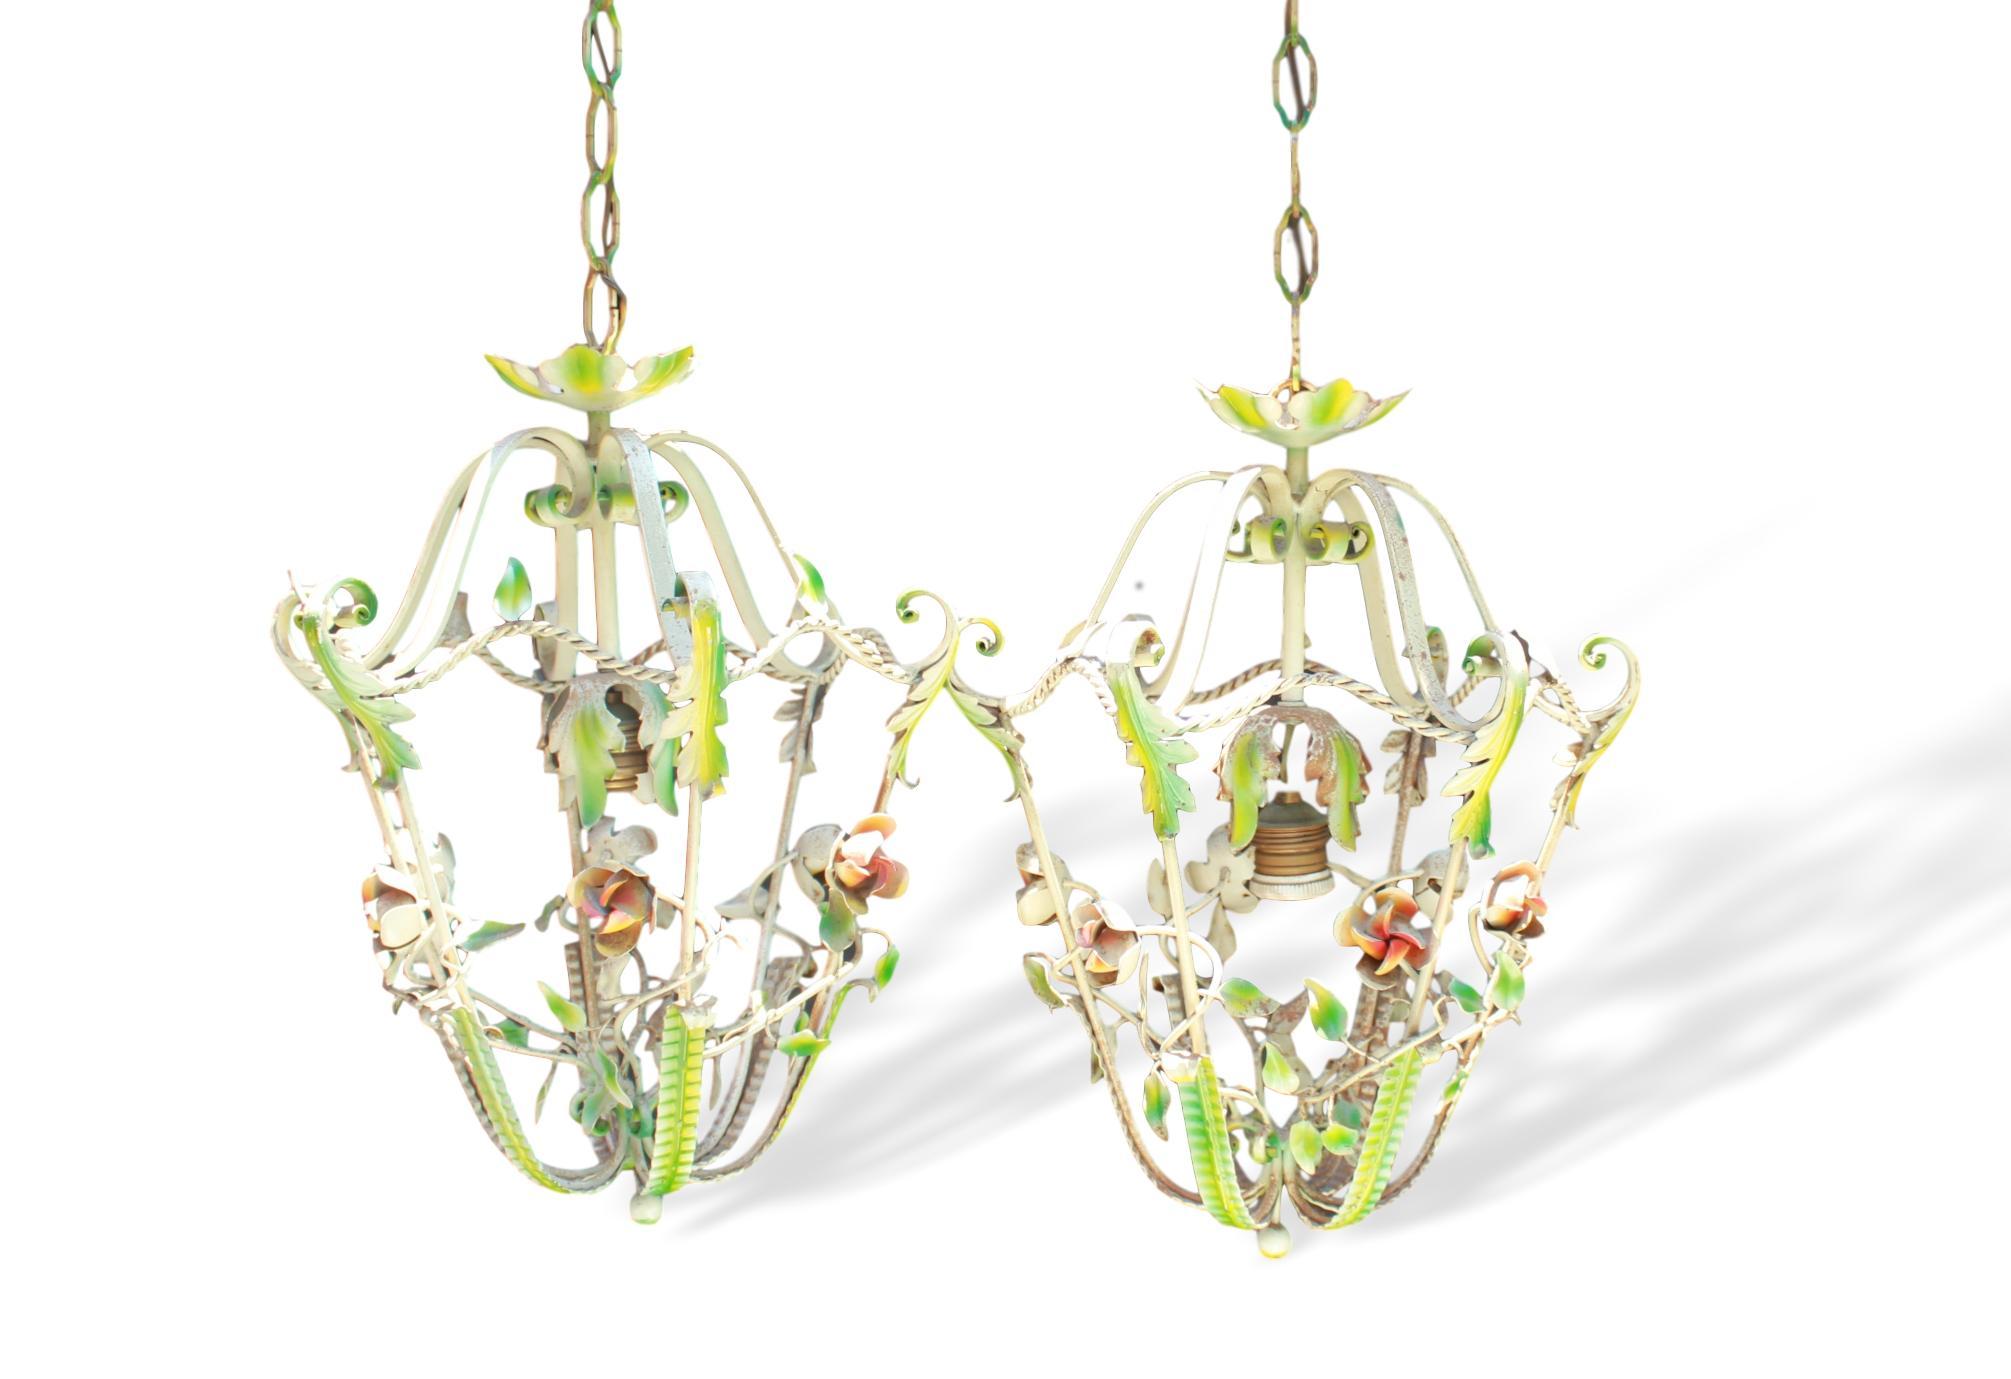 Pair of Midcentury Painted Iron Florals Hanging Lantern Light Fixtures, Italian 1